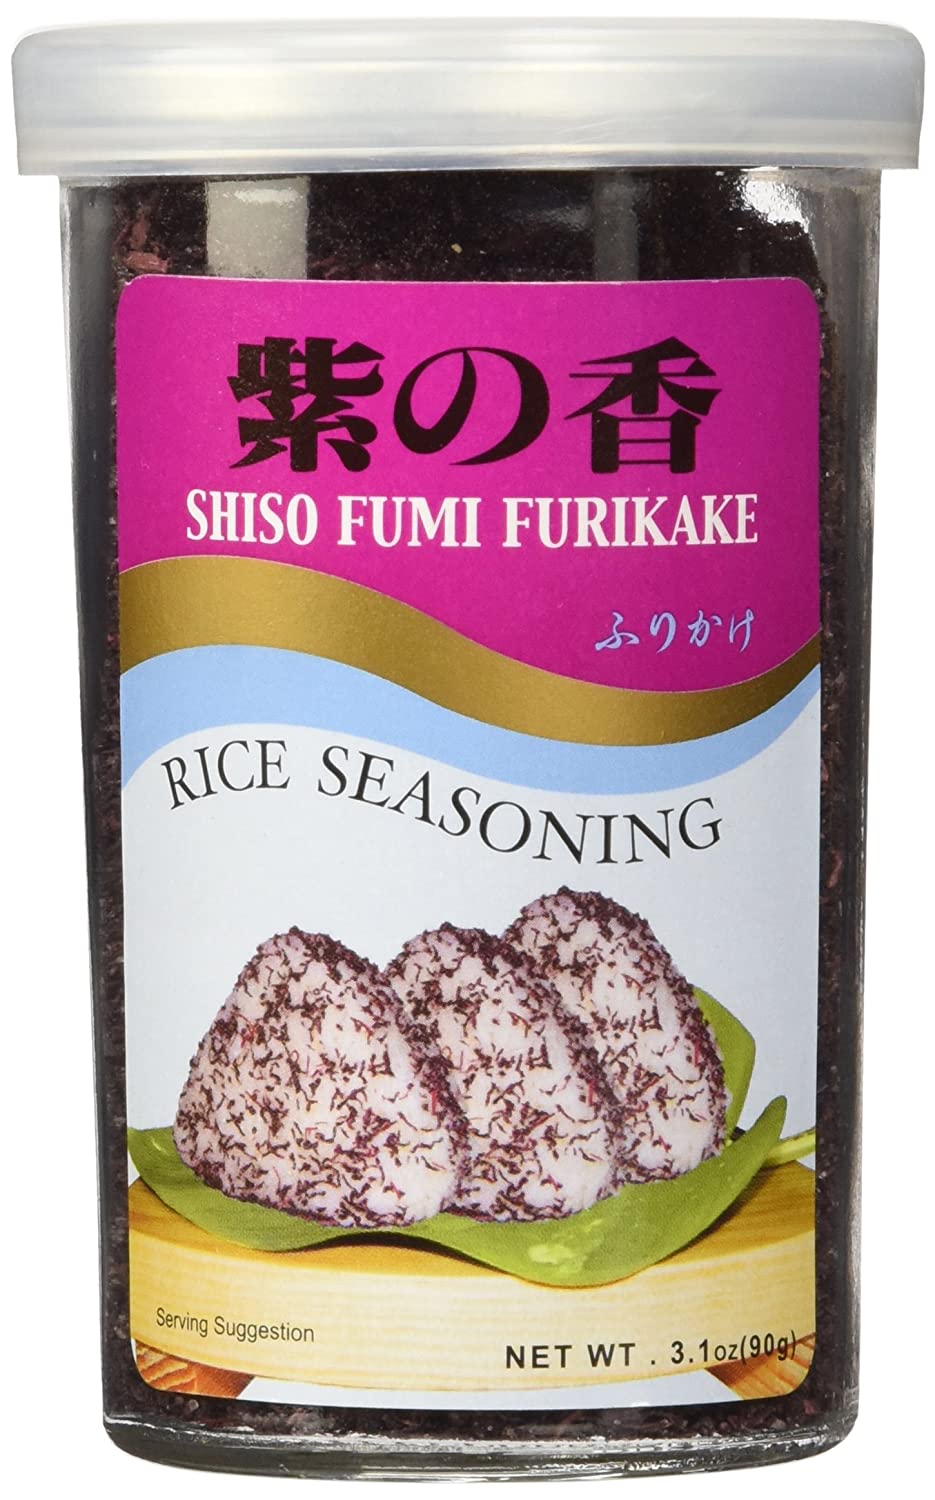 Furikake Shiso Fumi 50 gr